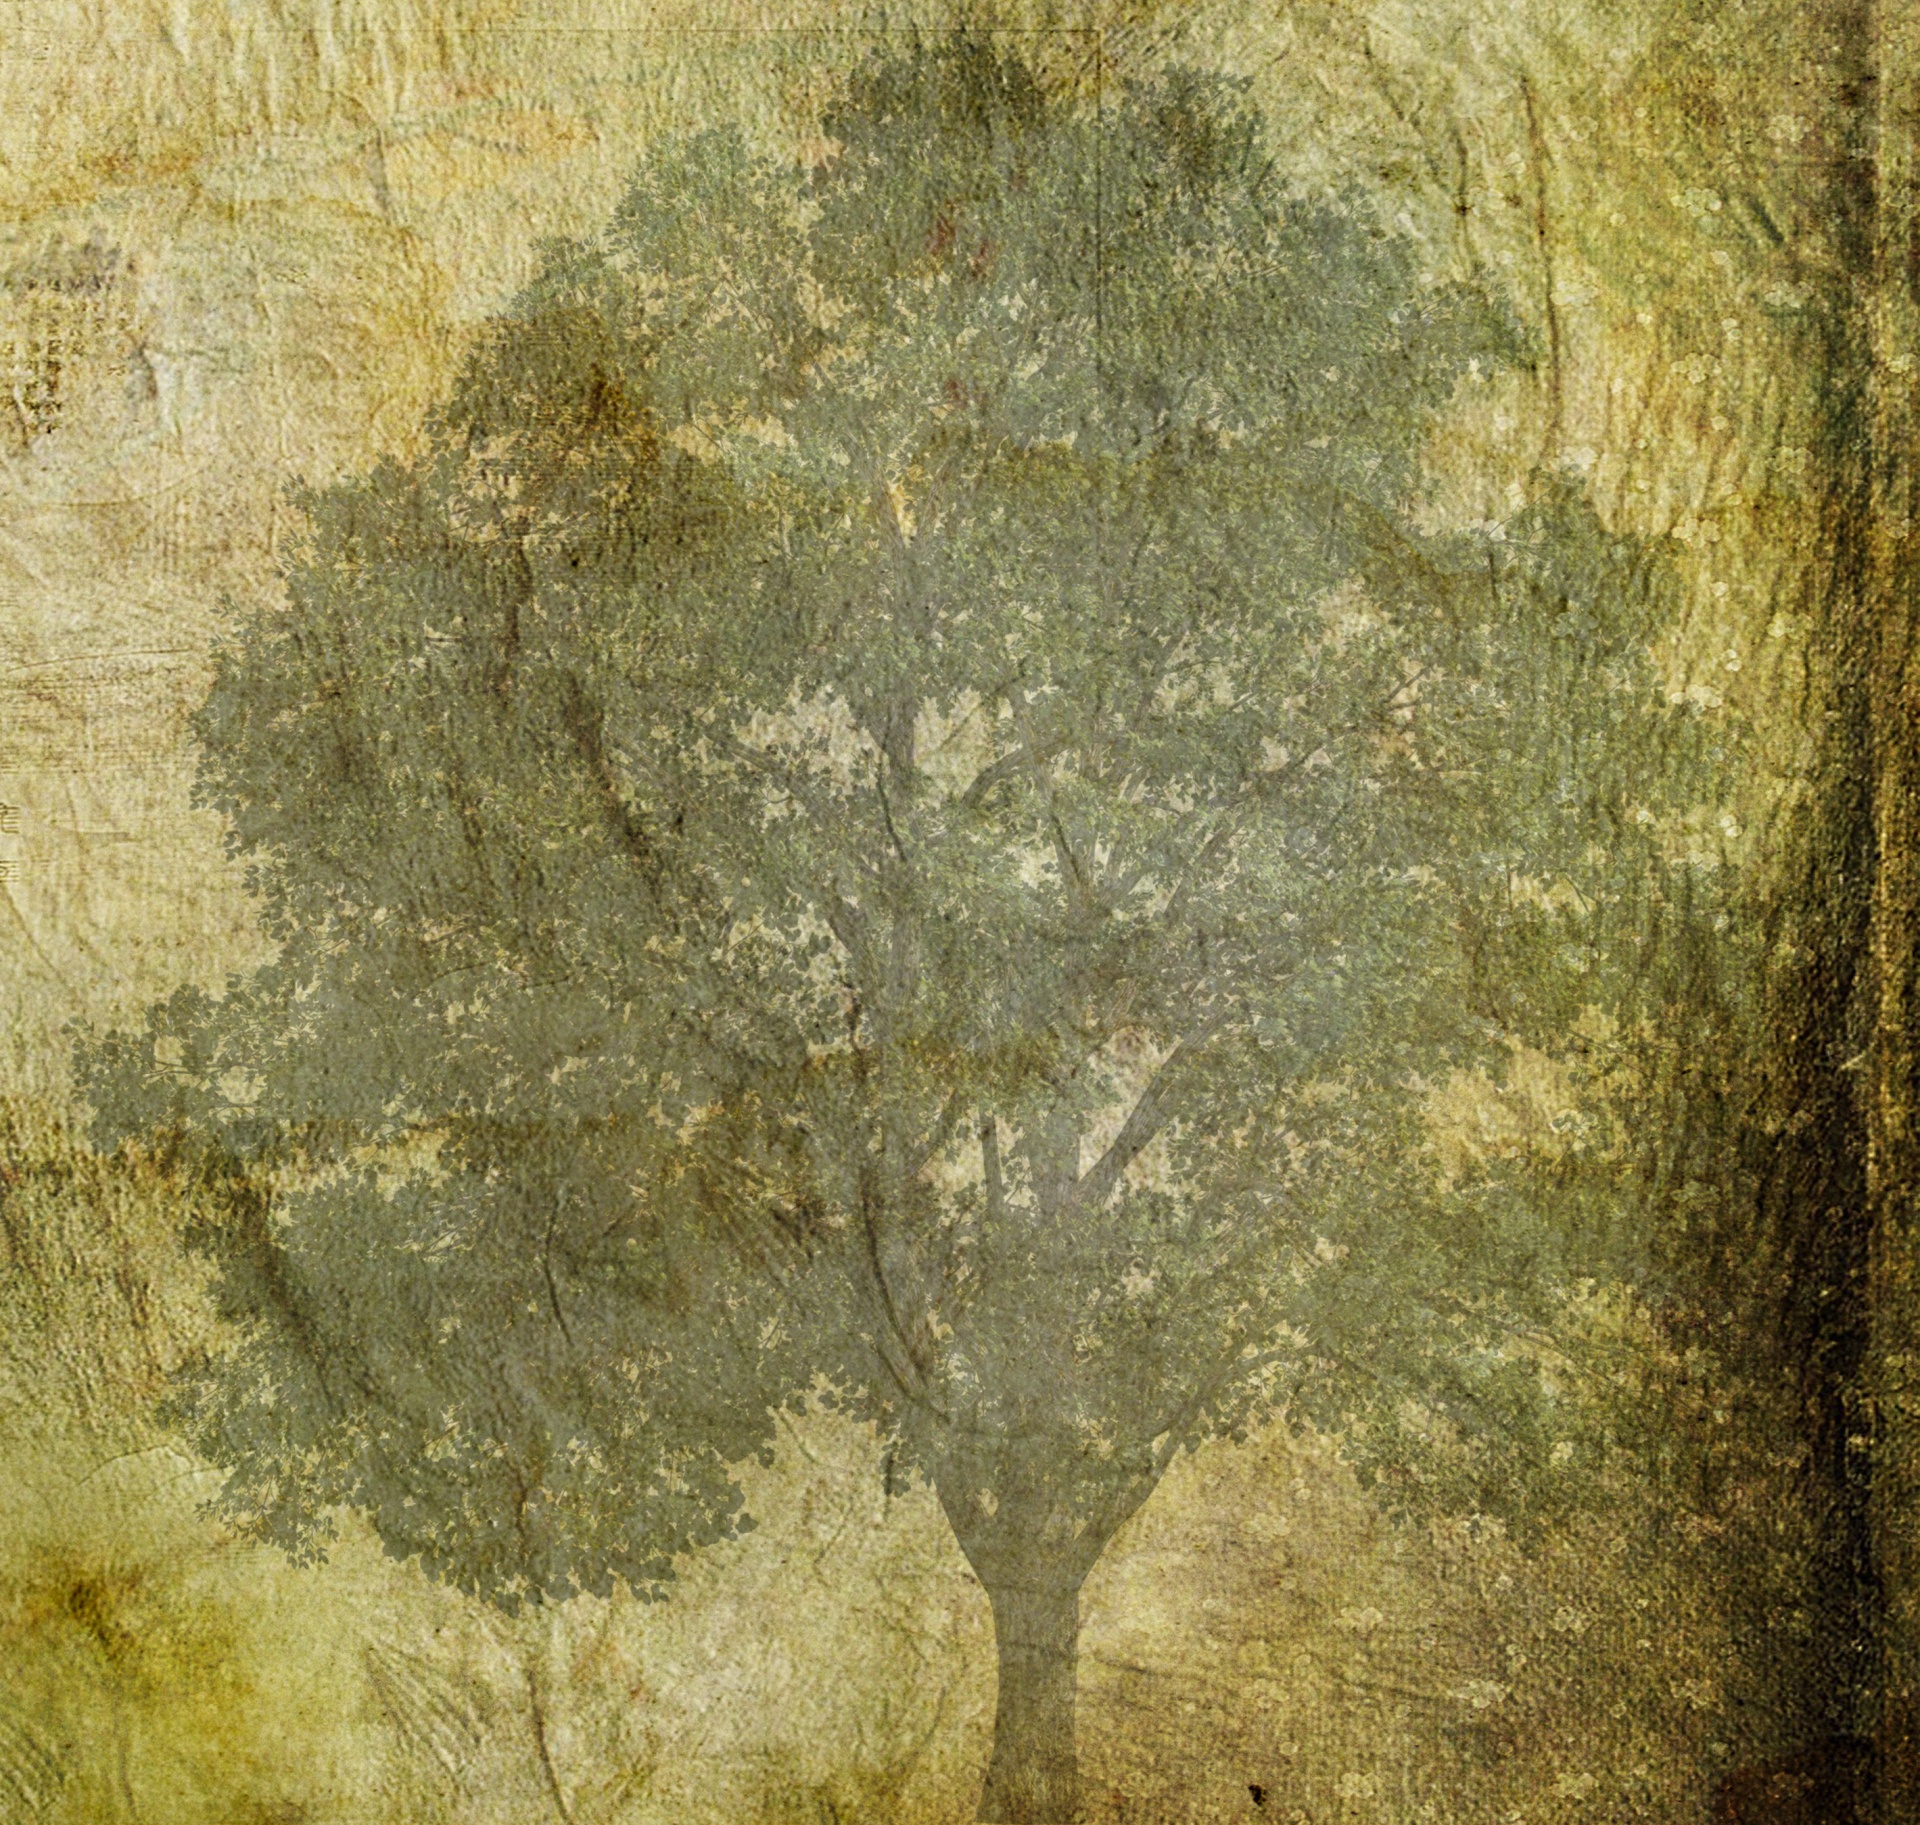 Tree On Grunge Texture Paper